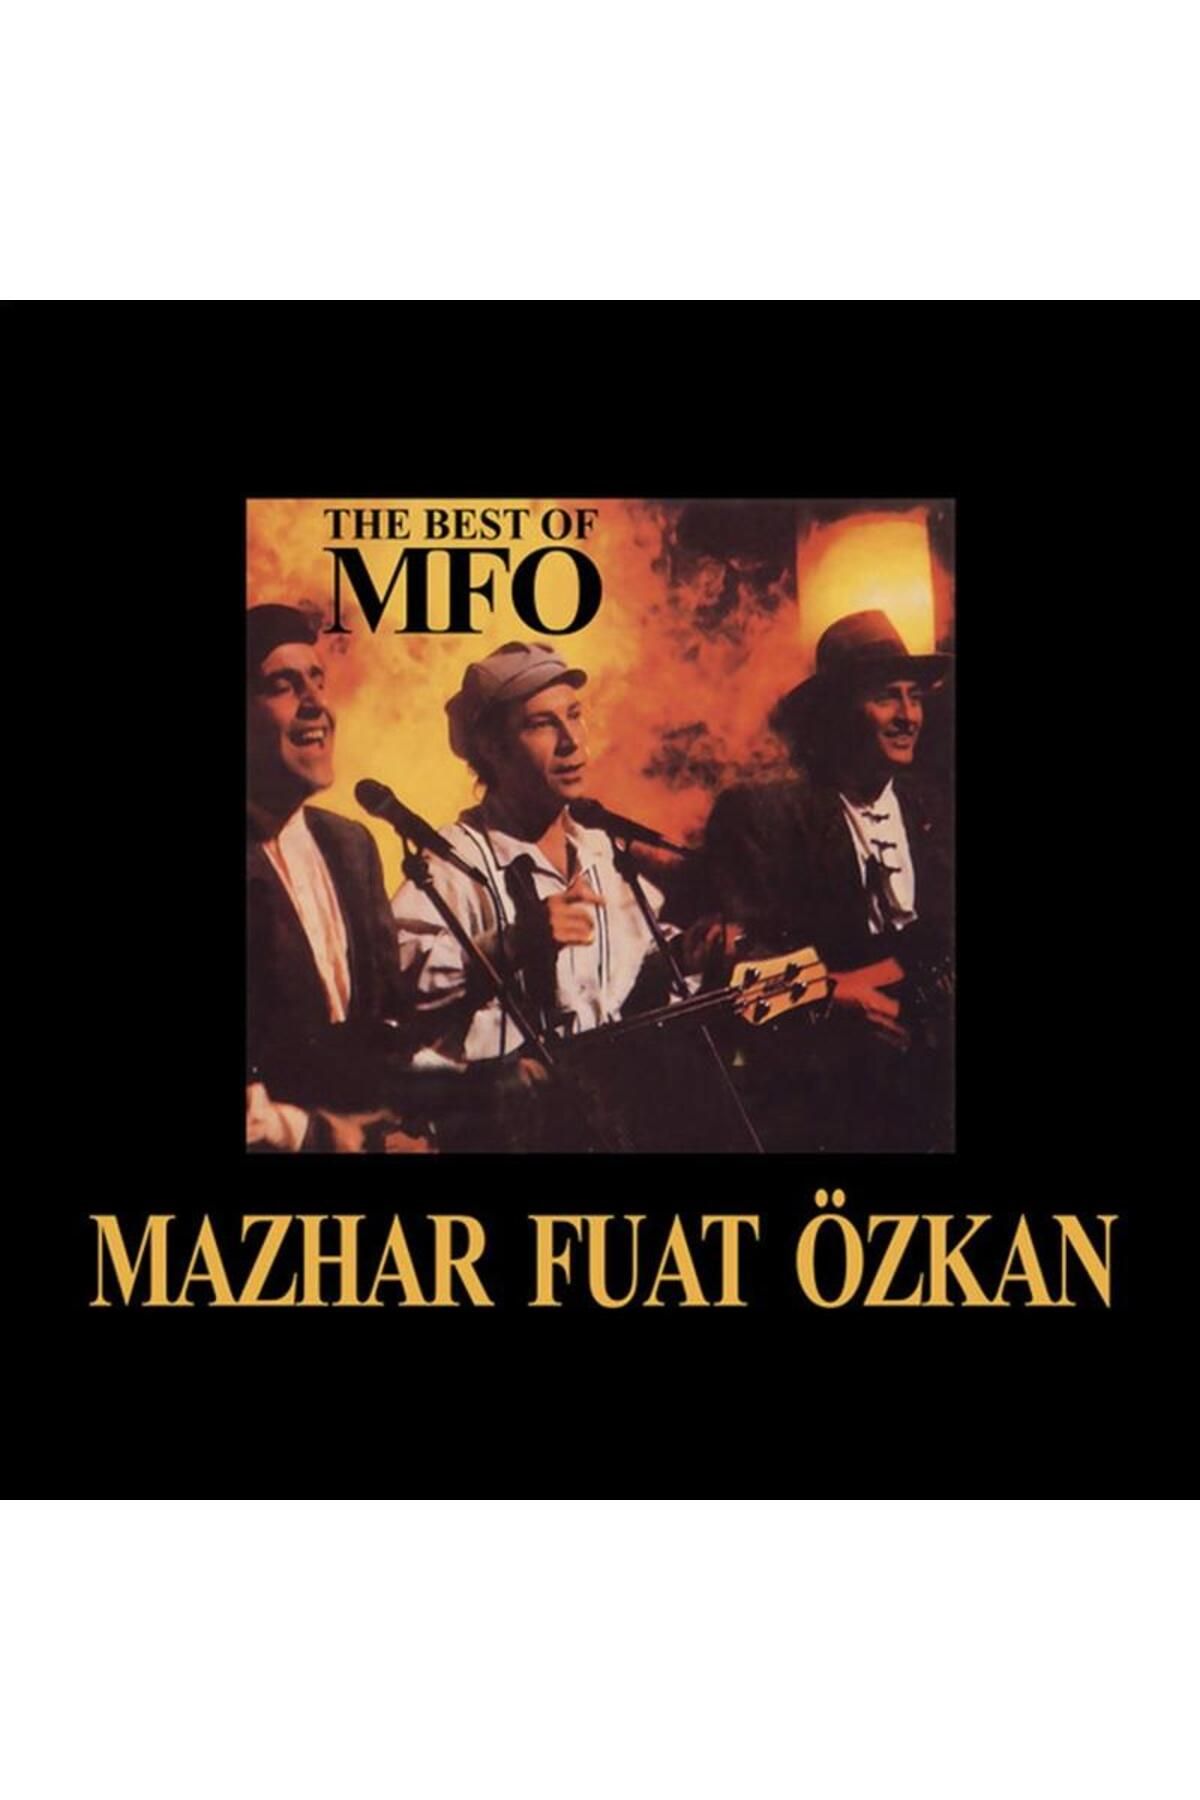 Ali The Stereo MFÖ – The Best Of MFO - Mazhar Fuat Özkan Rock 2xLP Vinly Plak alithestereo